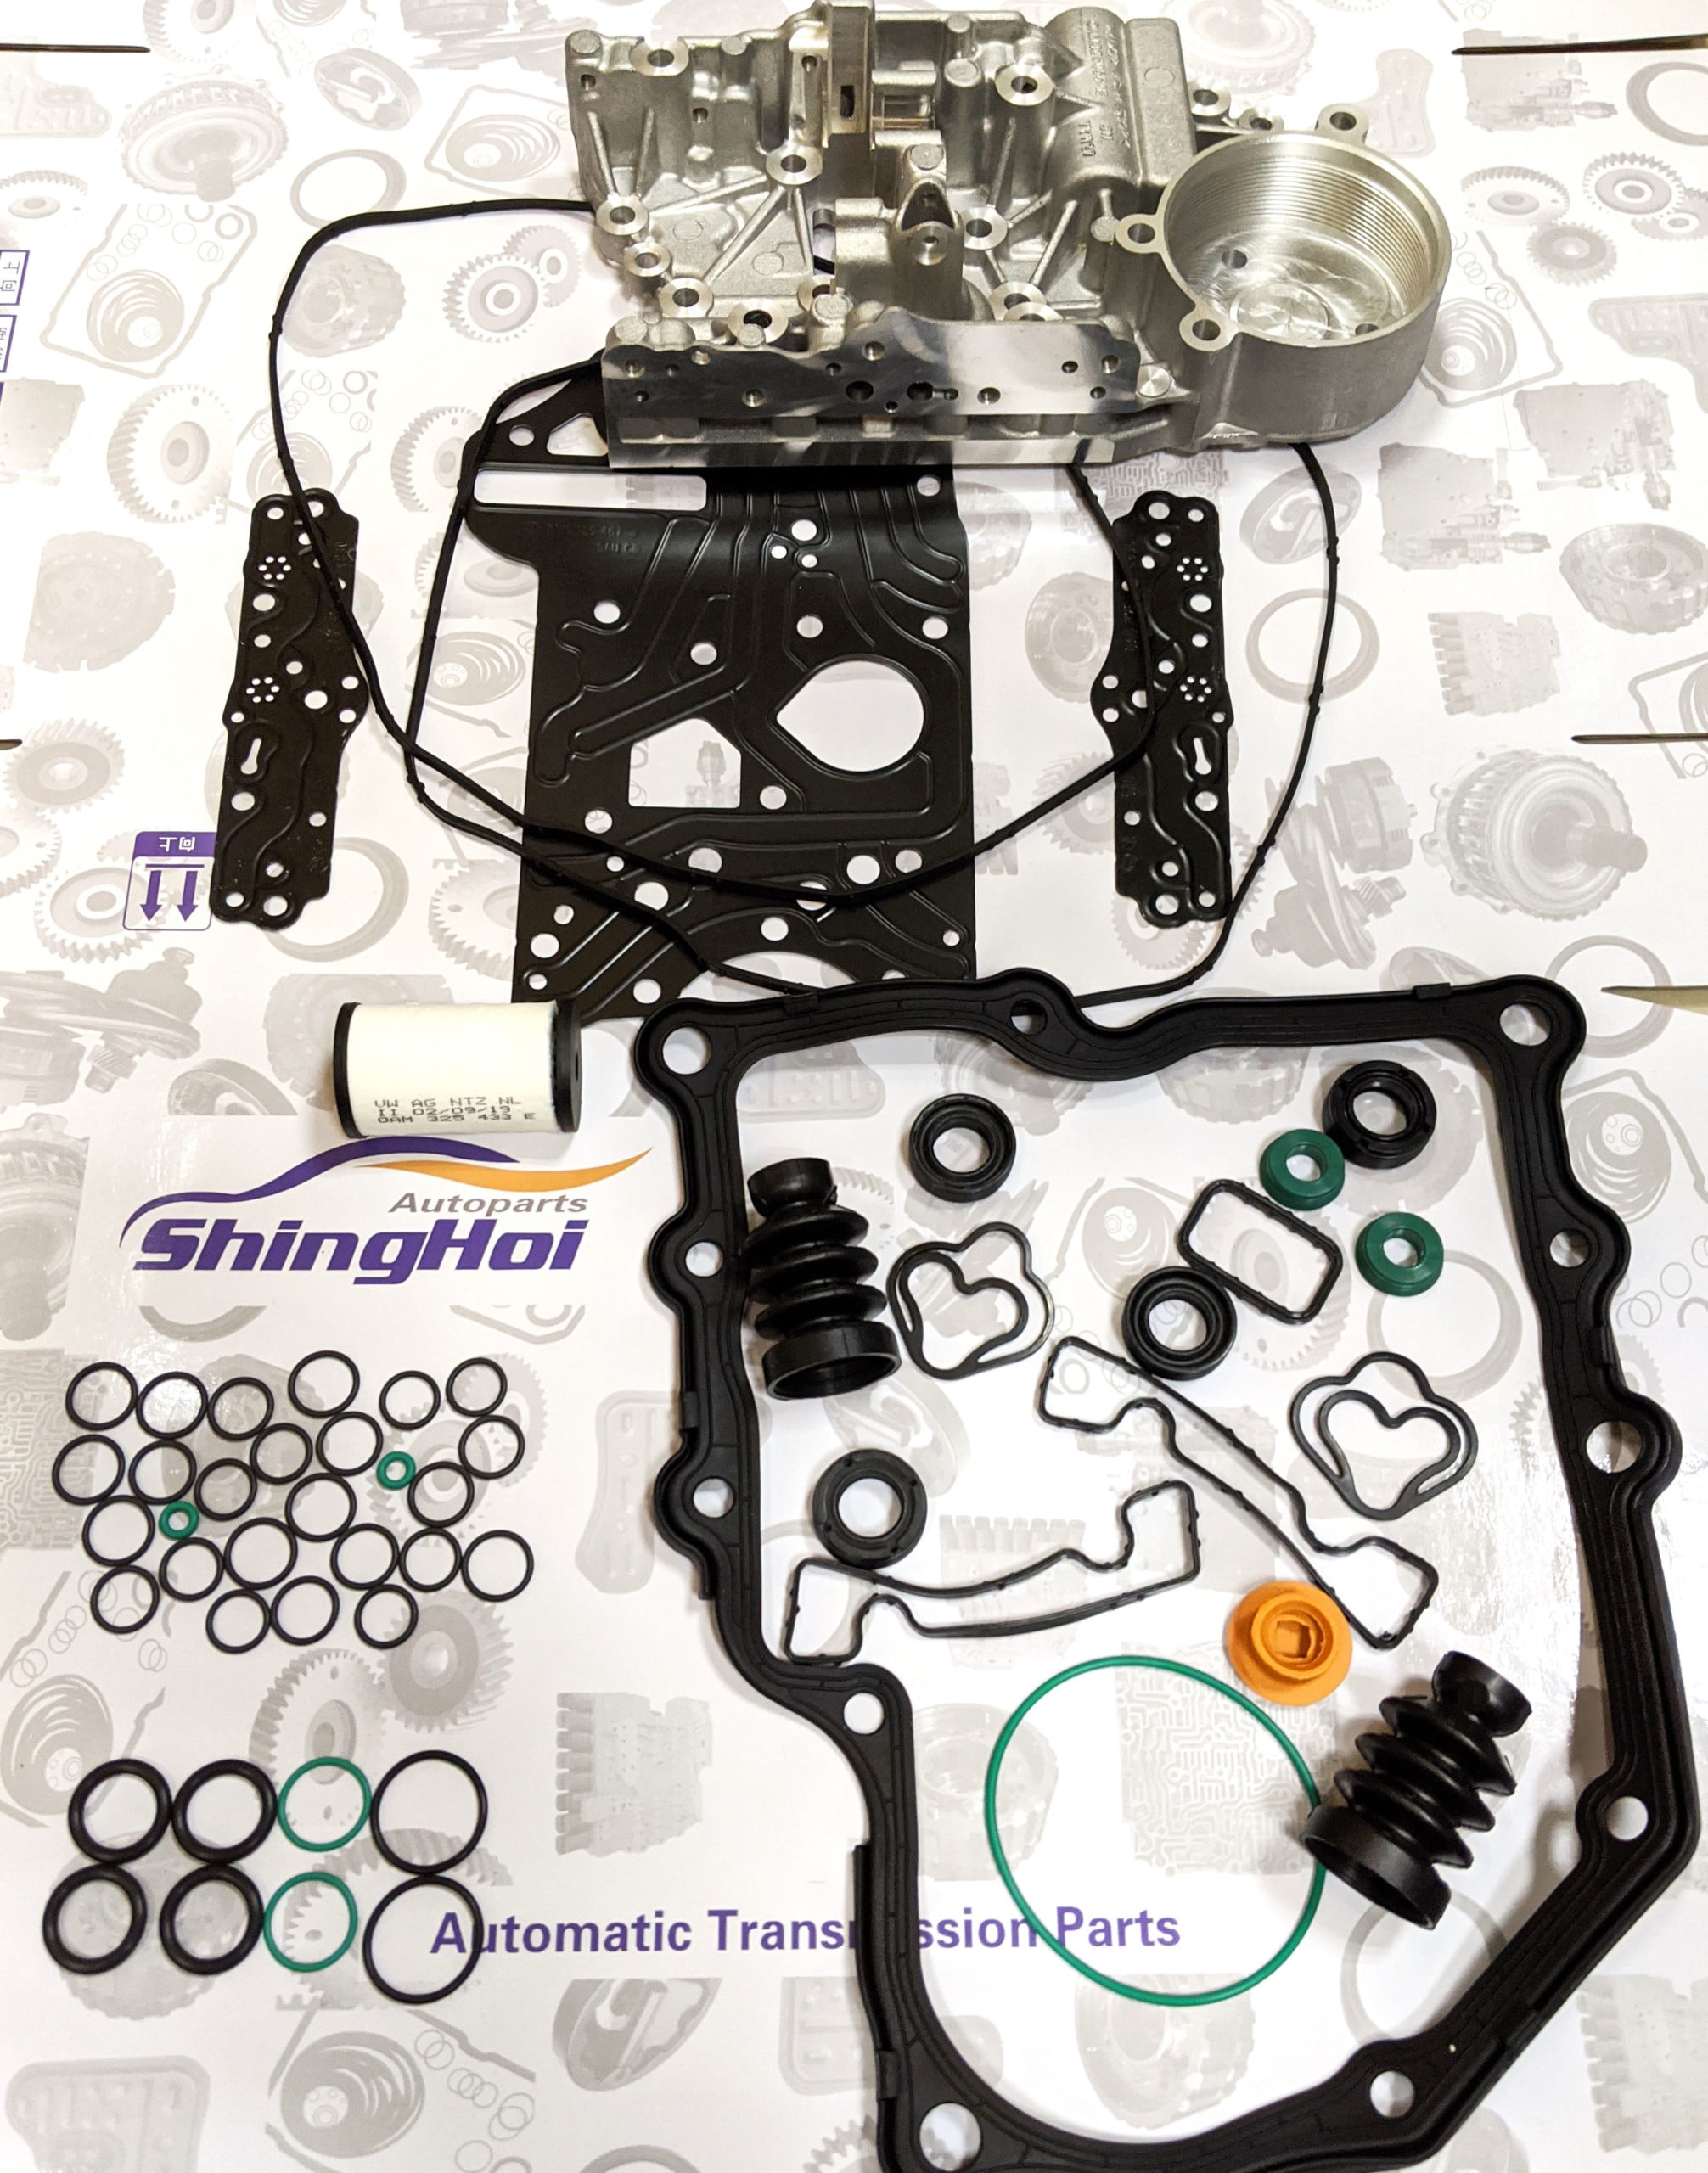 Dsg Dq200 0am Valve Body Mechanical Repair Kit For Vw Audi Skoda Seat Sheng Hai Auto Parts Co Ltd